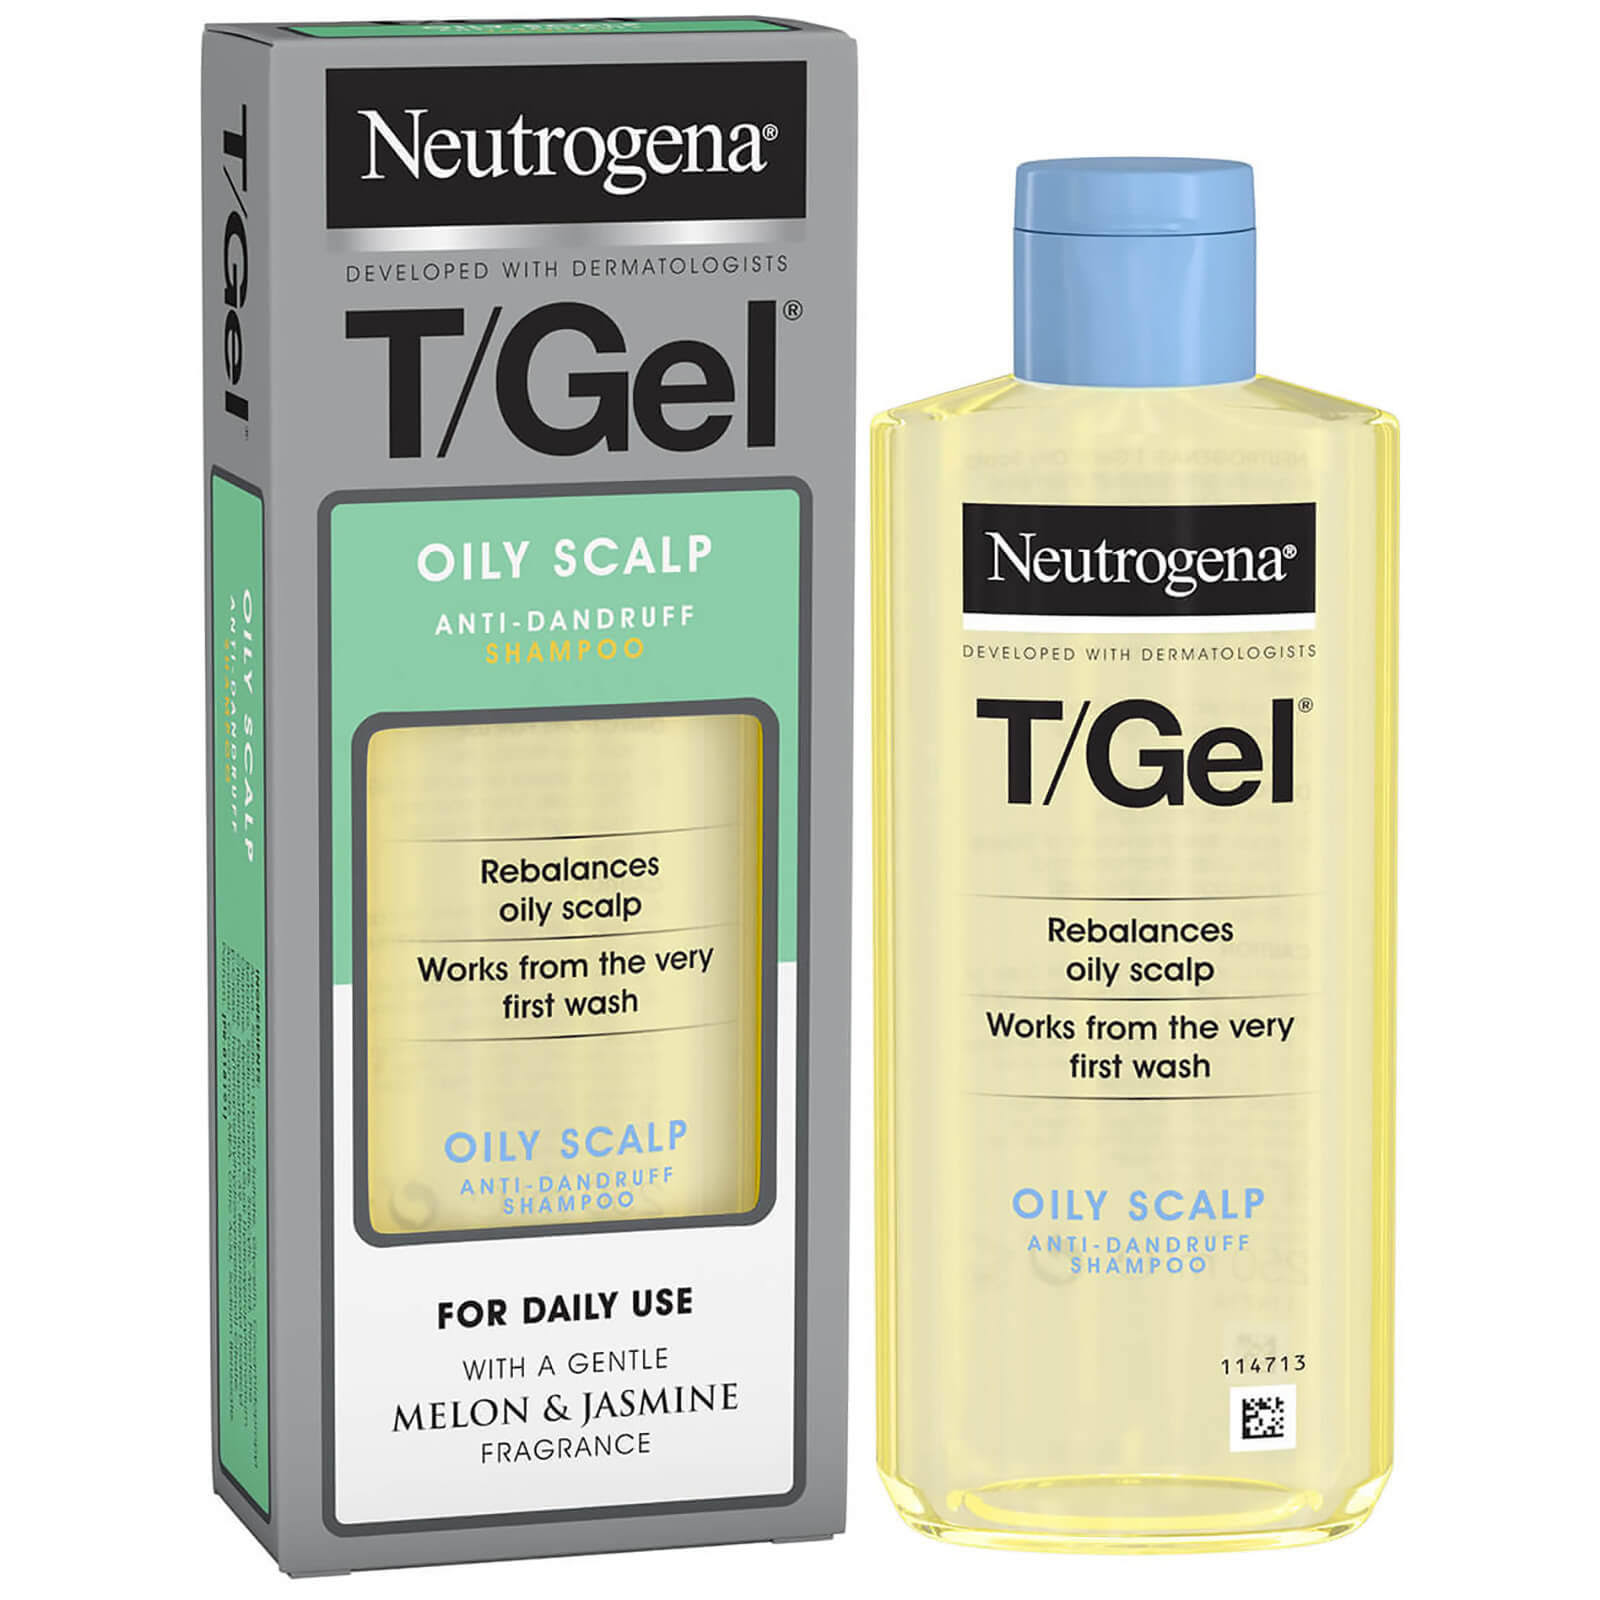 Neutrogena T/Gel Oily Scalp Anti-Dandruff Shampoo - 250ml